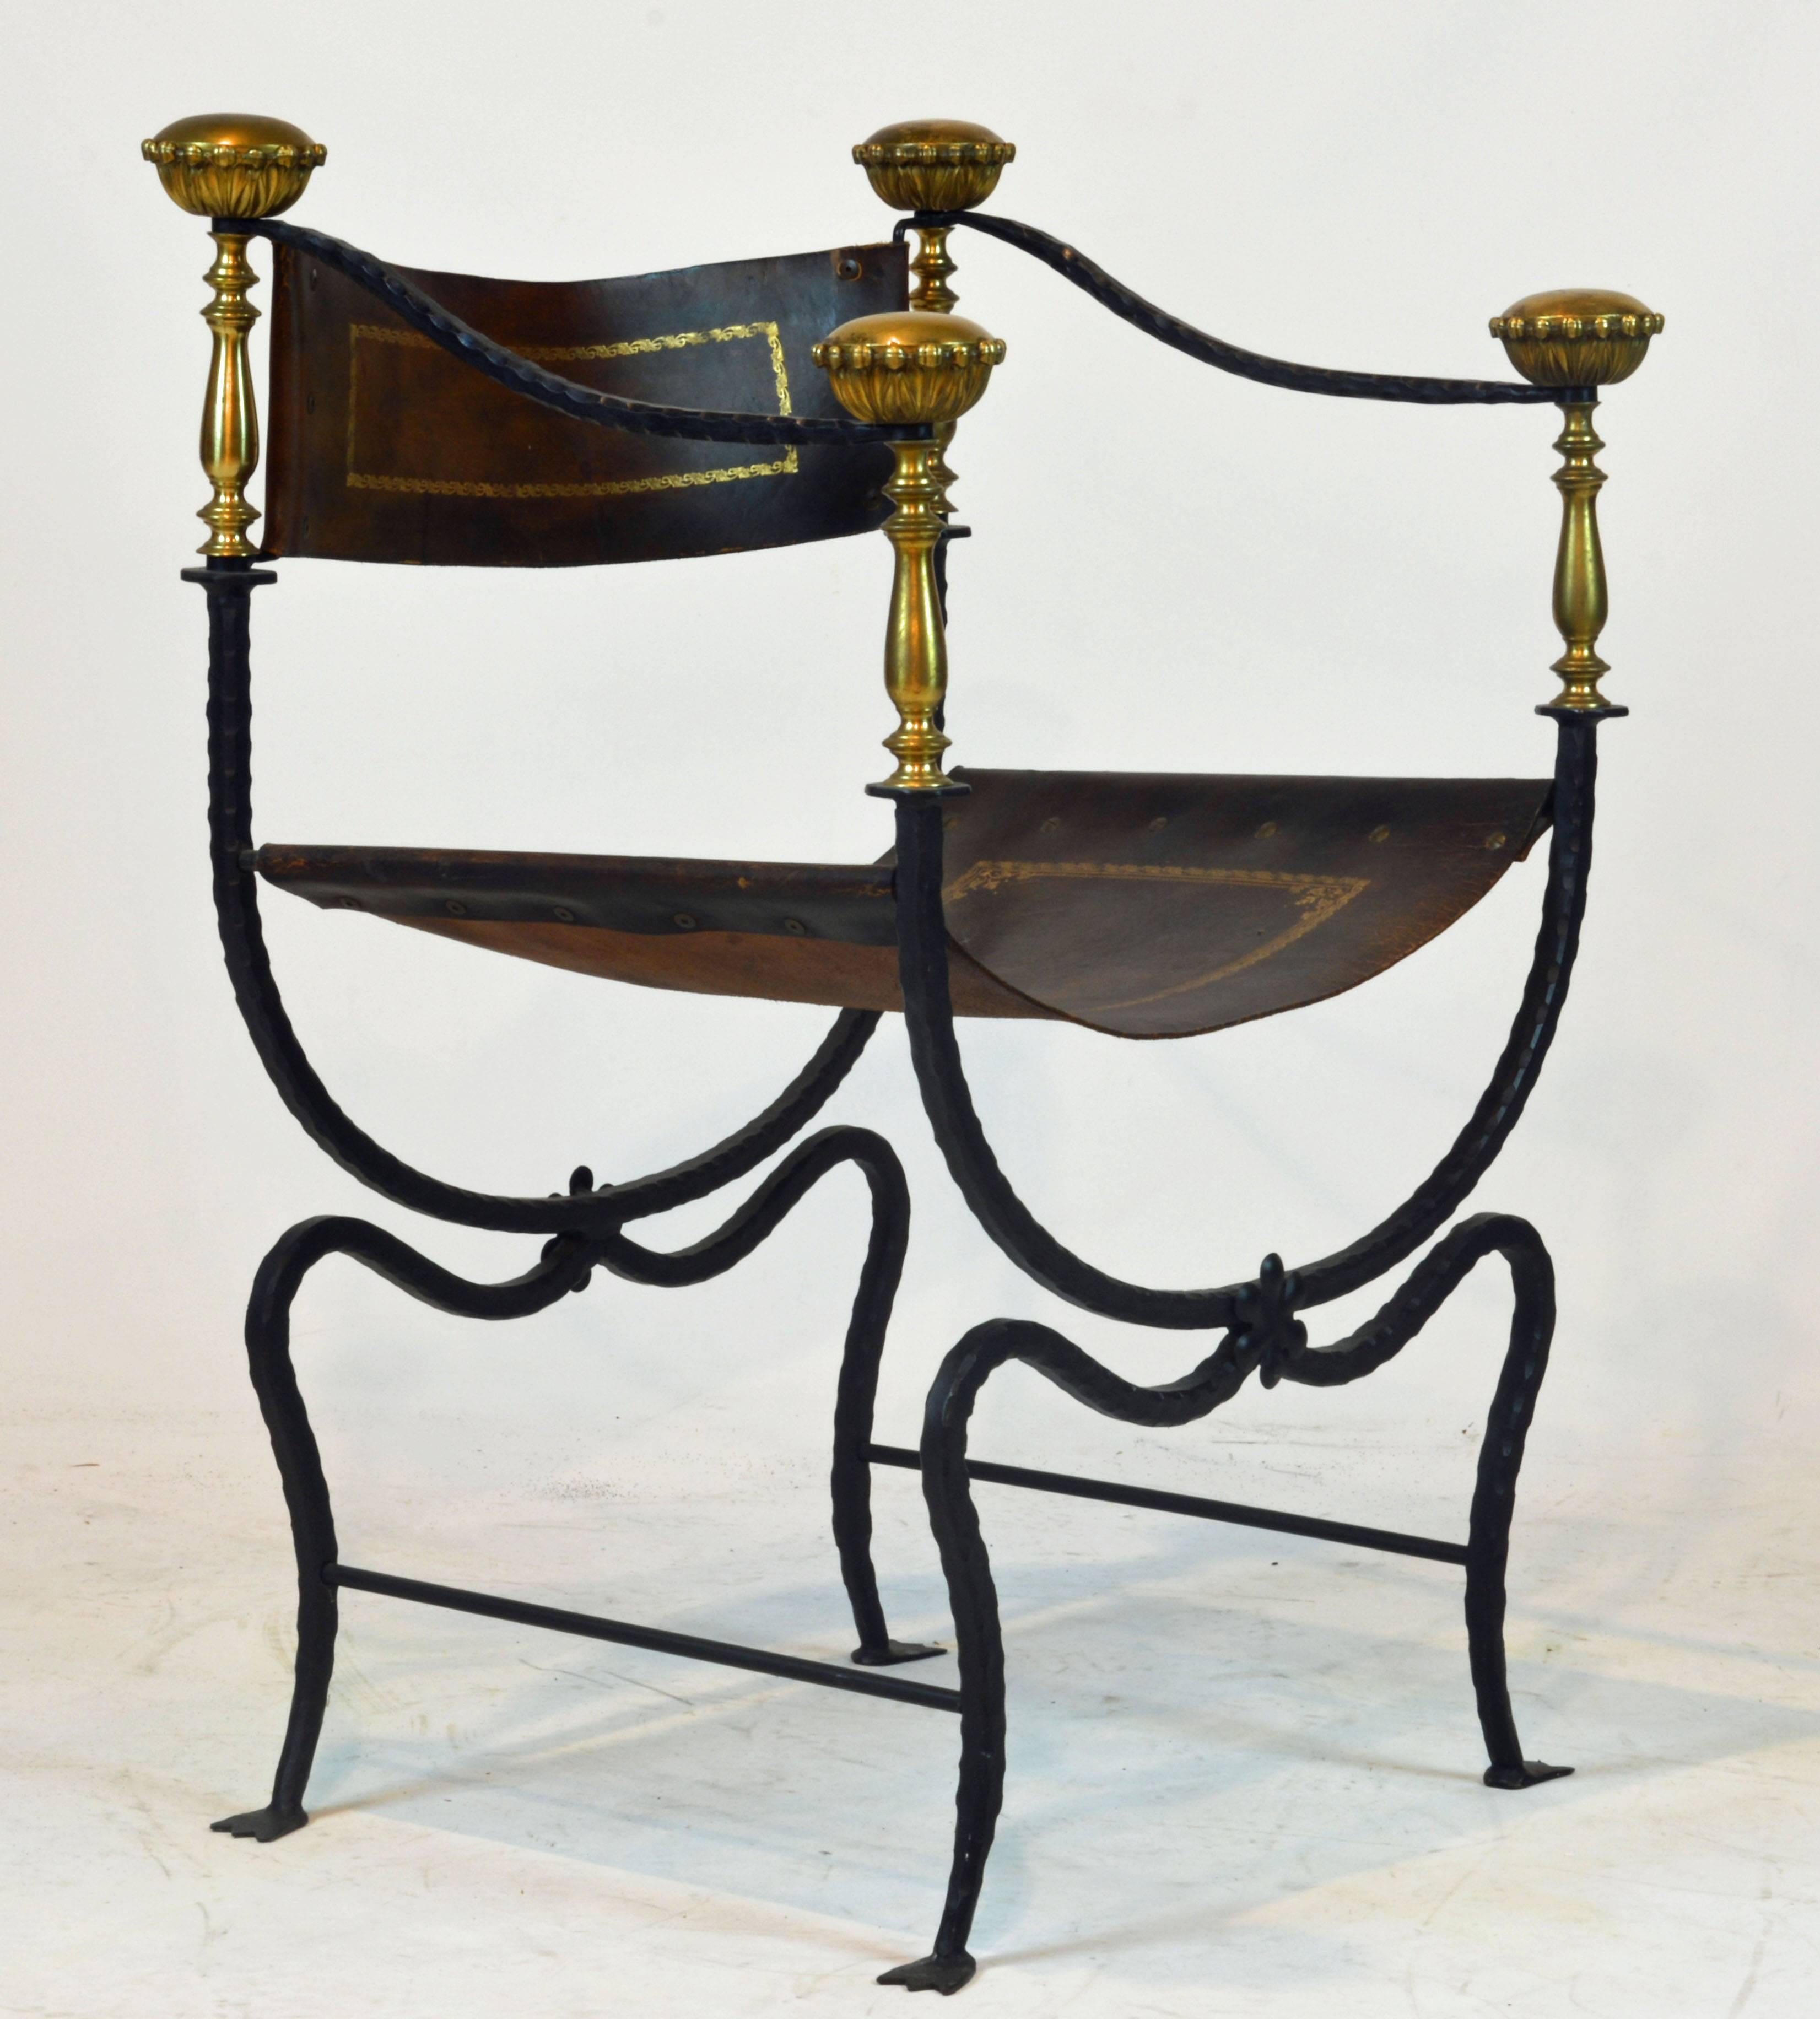 Italian Renaissance Style Wrought Iron and Bronze Savonarola Chair with Original Leather